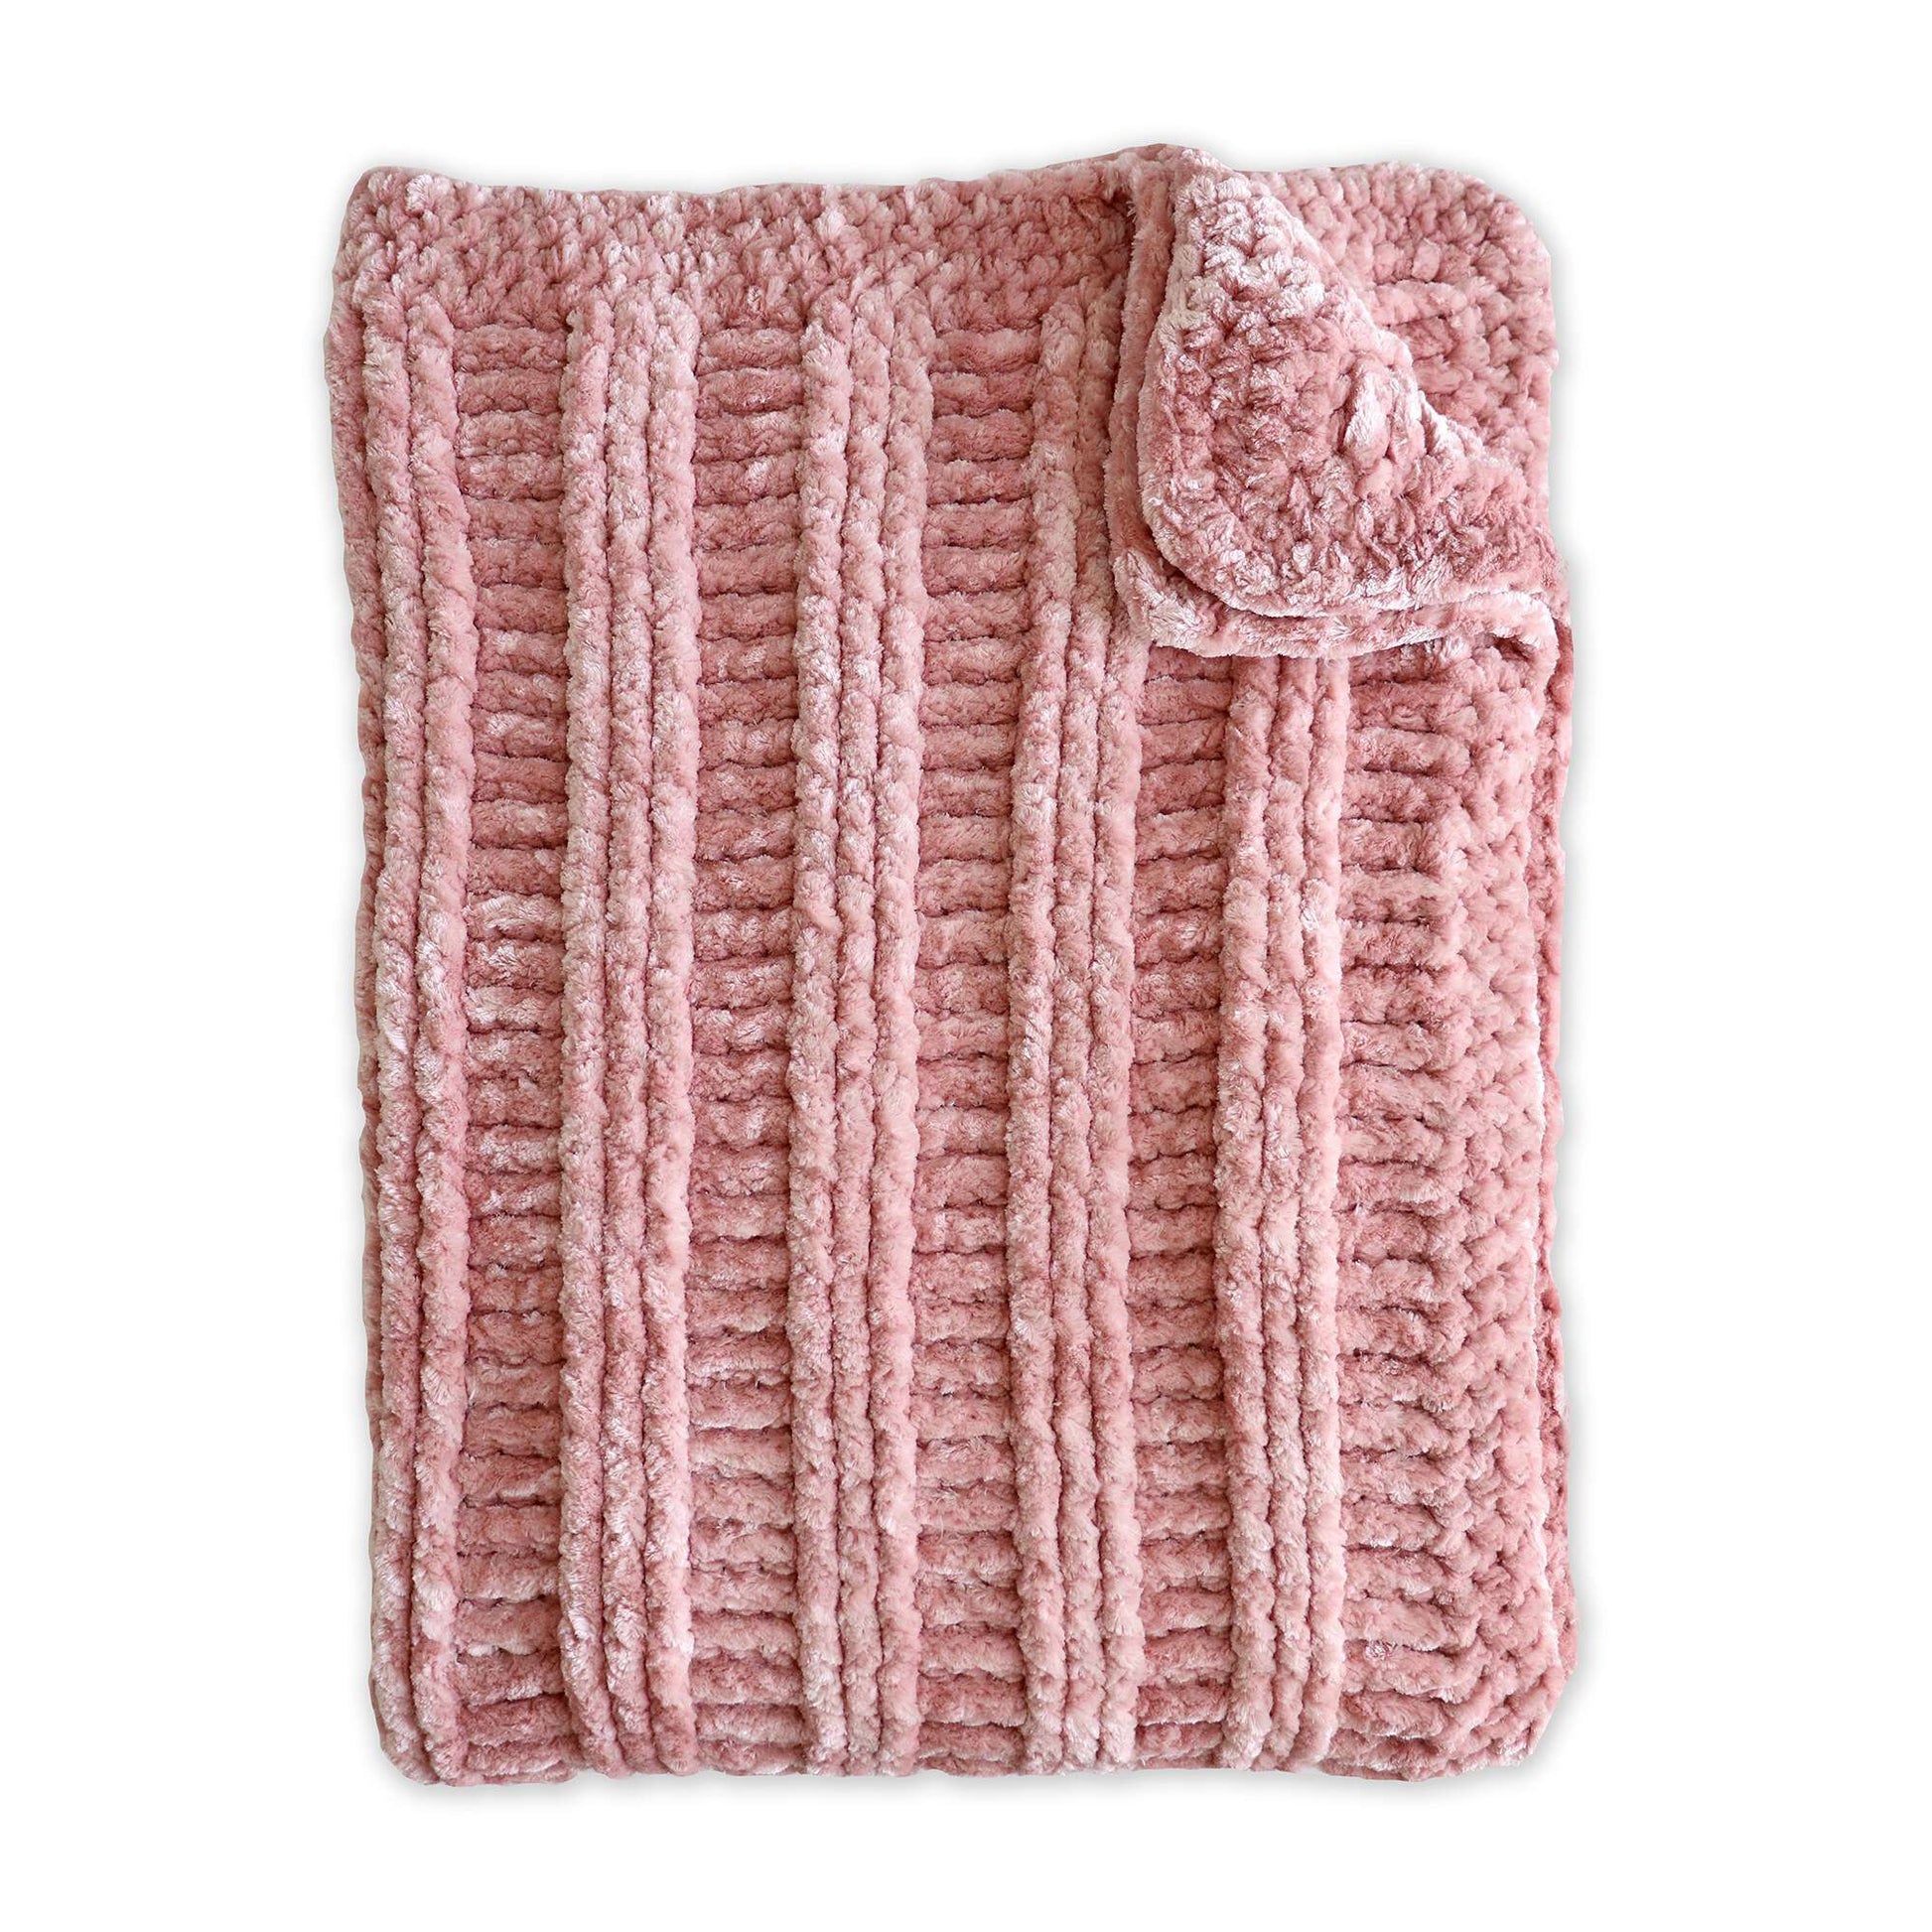 Bernat Velvet Yarn Patterns: Textured Baby Blanket - Craft-Mart